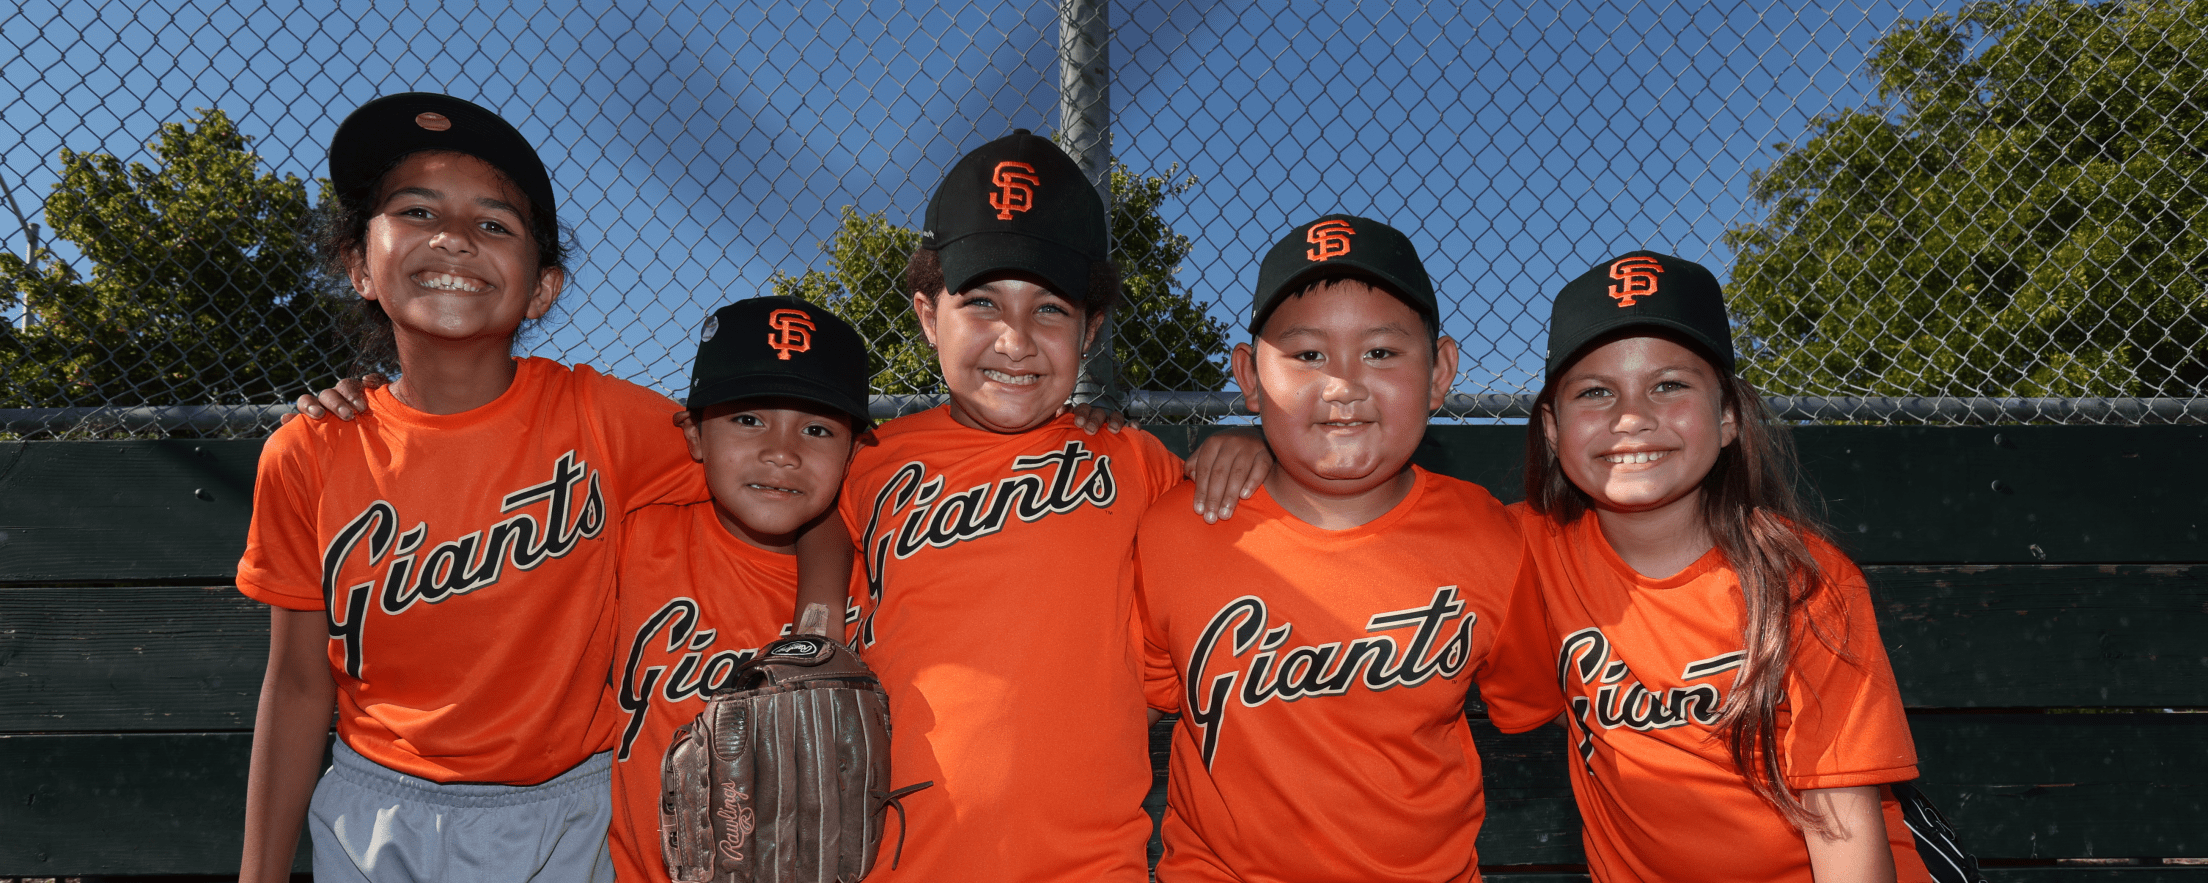 SF Giants Child Jerseys